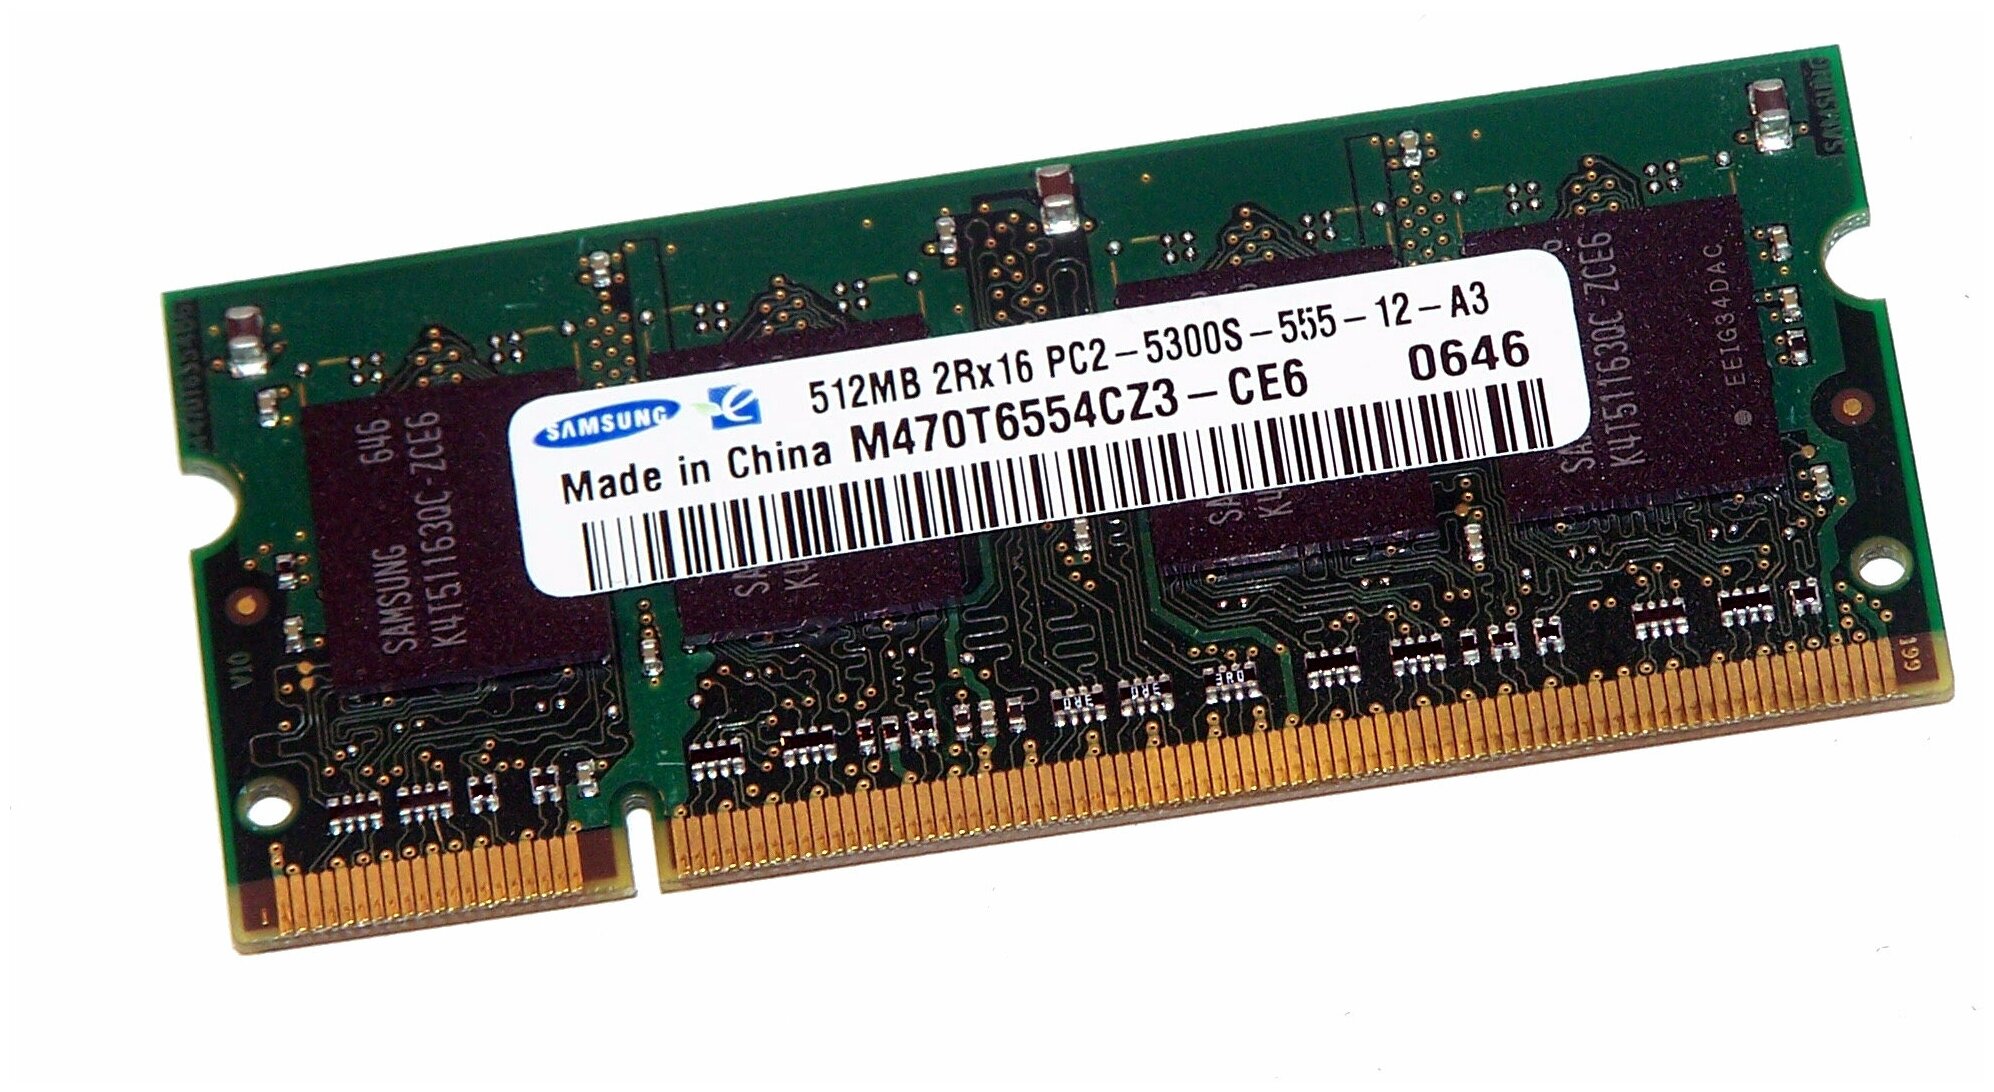 Оперативная память Samsung 512 МБ DDR2 667 МГц SODIMM M470T6554EZ3-CE6